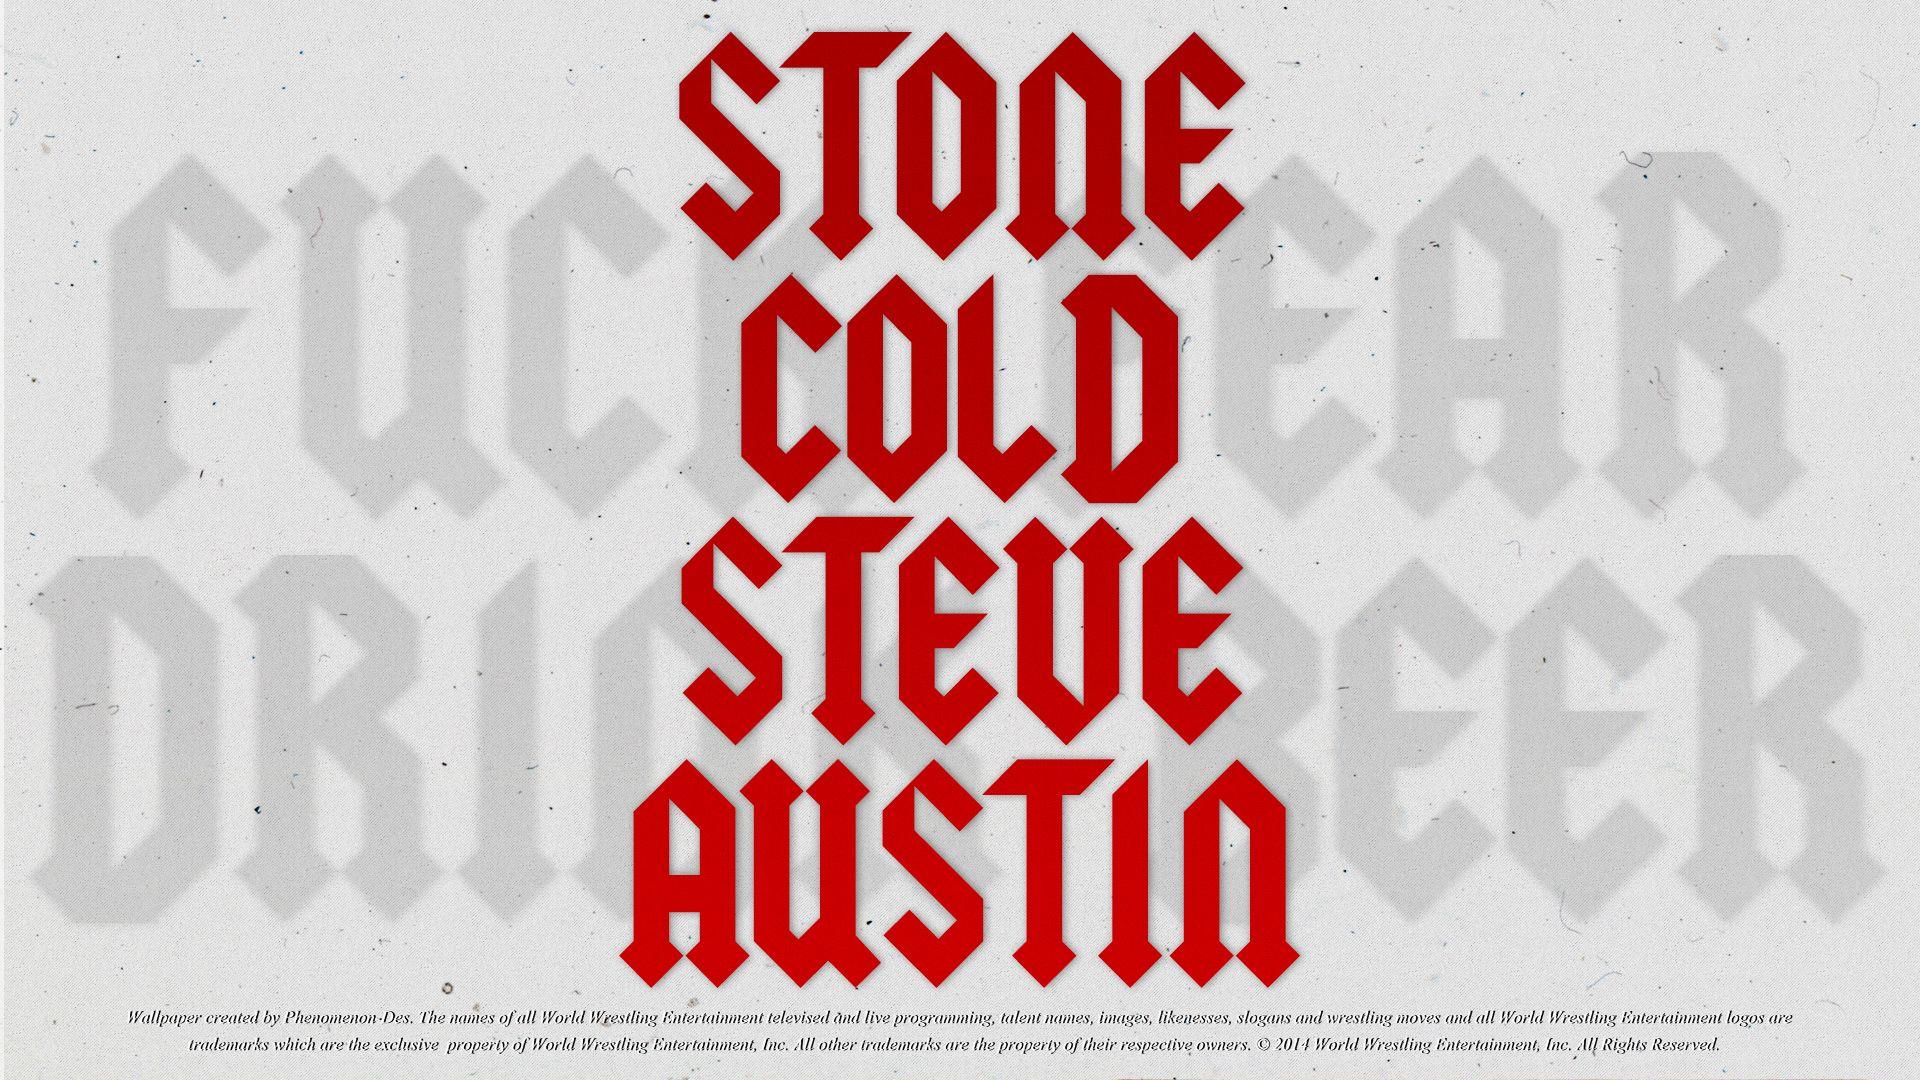 WWE Stone Cold Steve Austin Wallpaper By Phenomenon Des